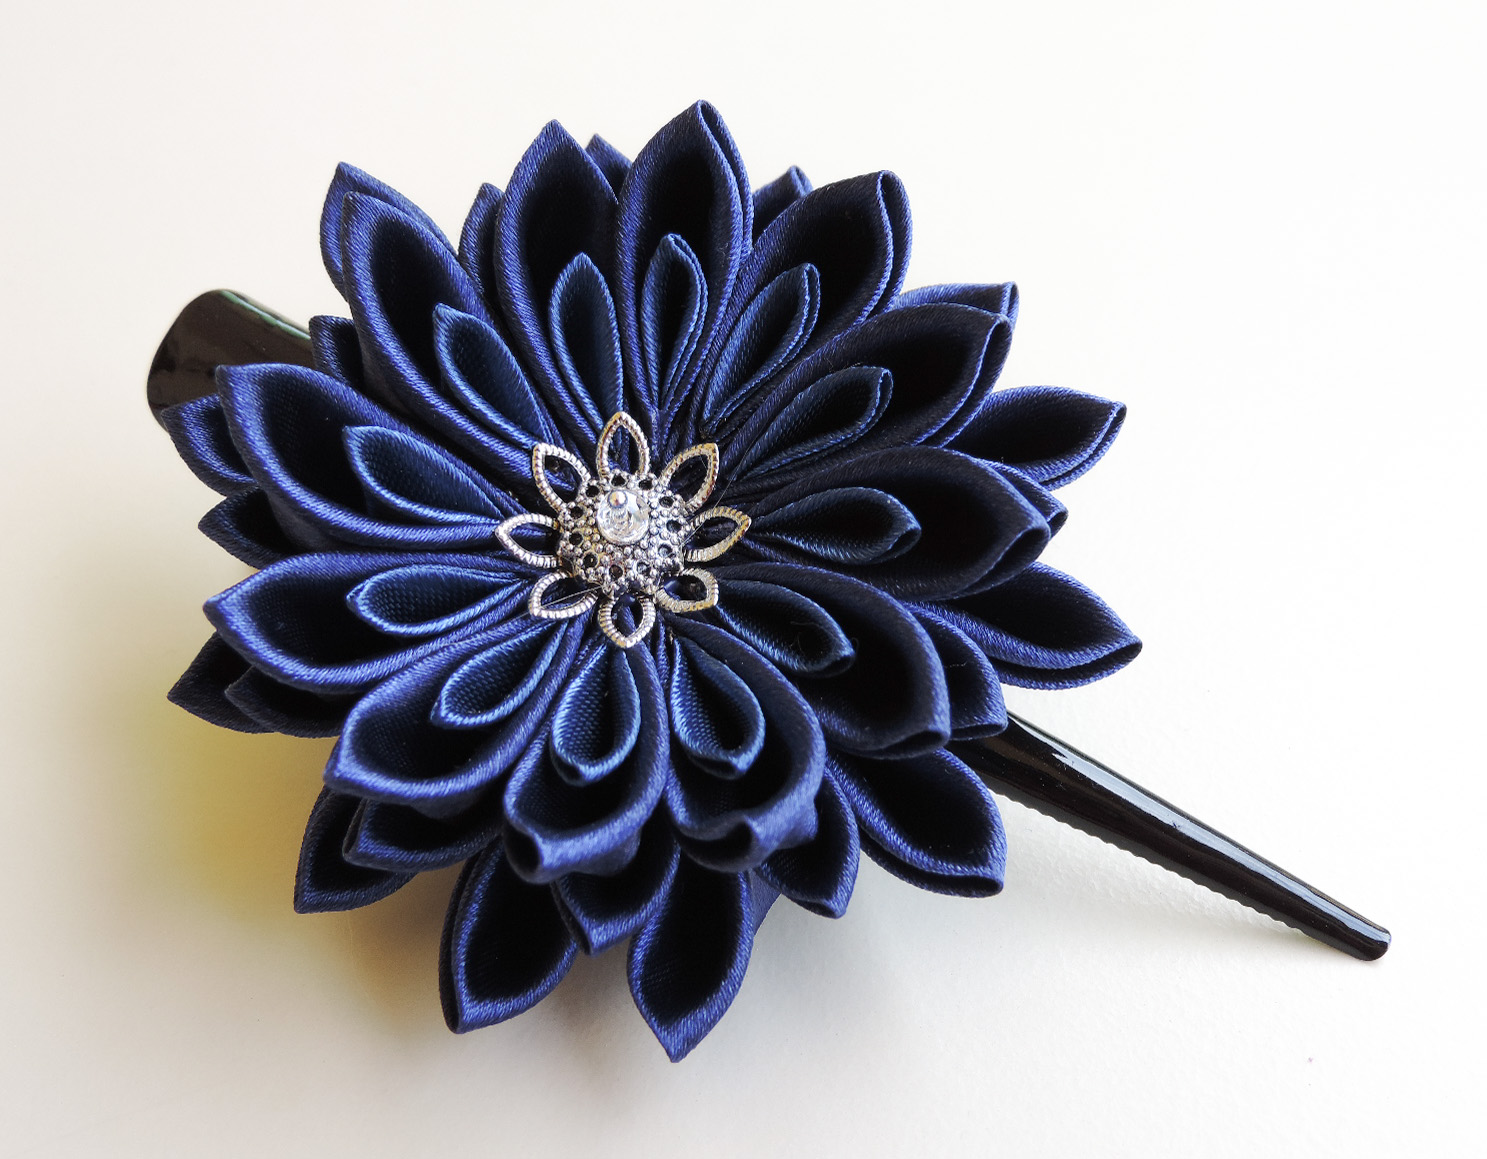 Navy blue satin chrysanthemum - DIY tutorial